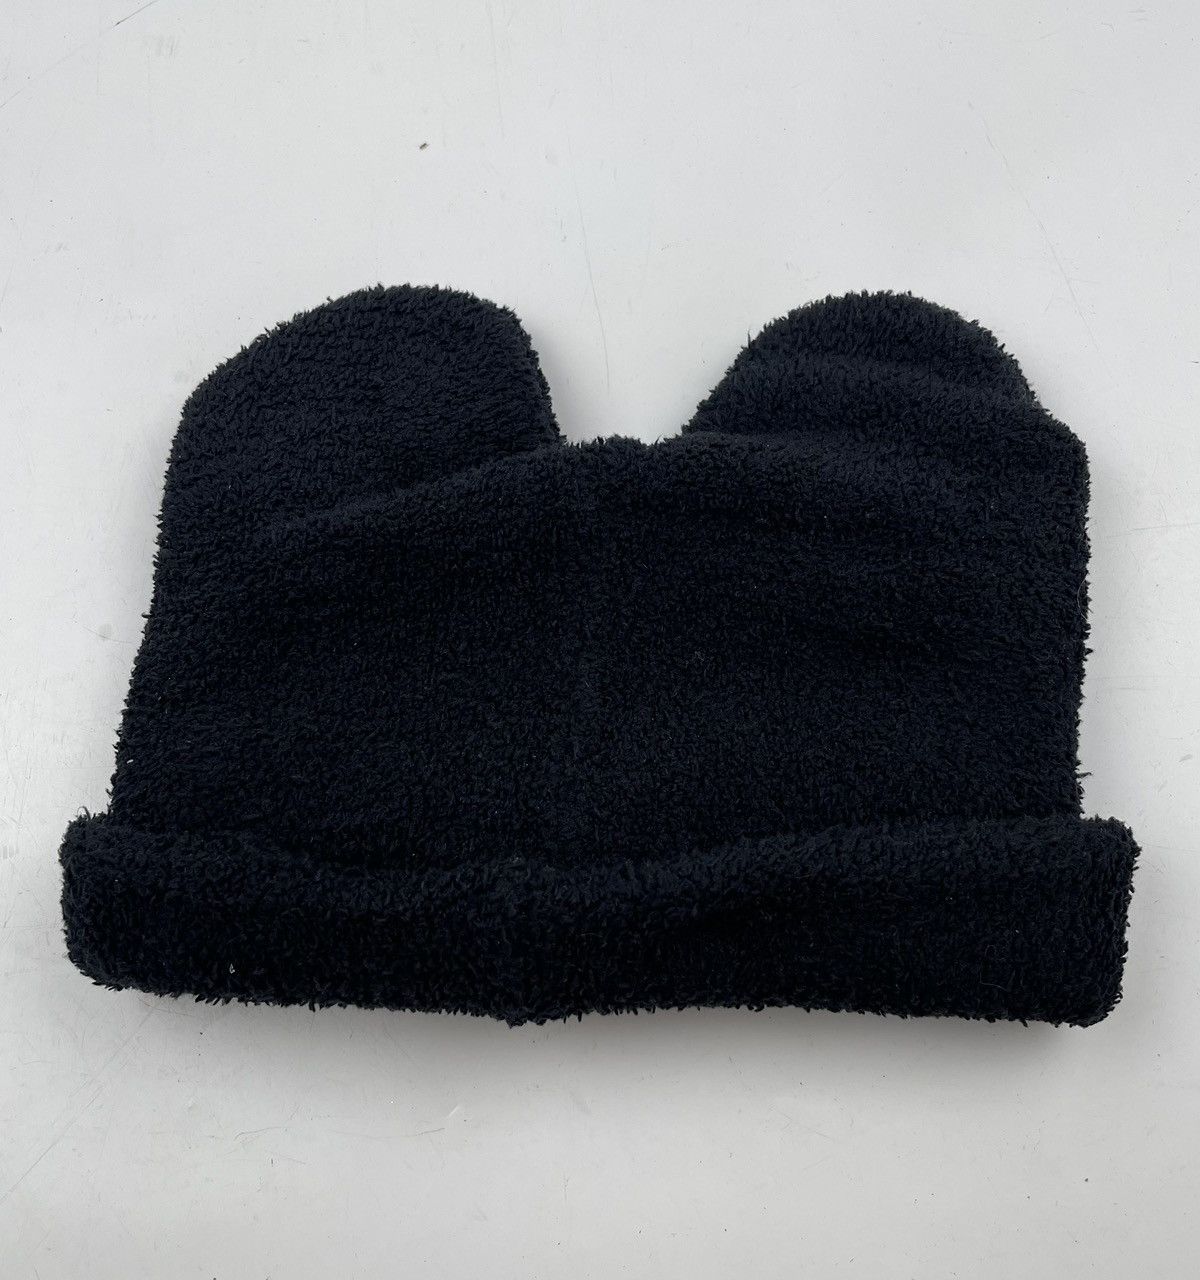 Japanese Brand - panpan tutu beanie hat with ear tc24 - 6